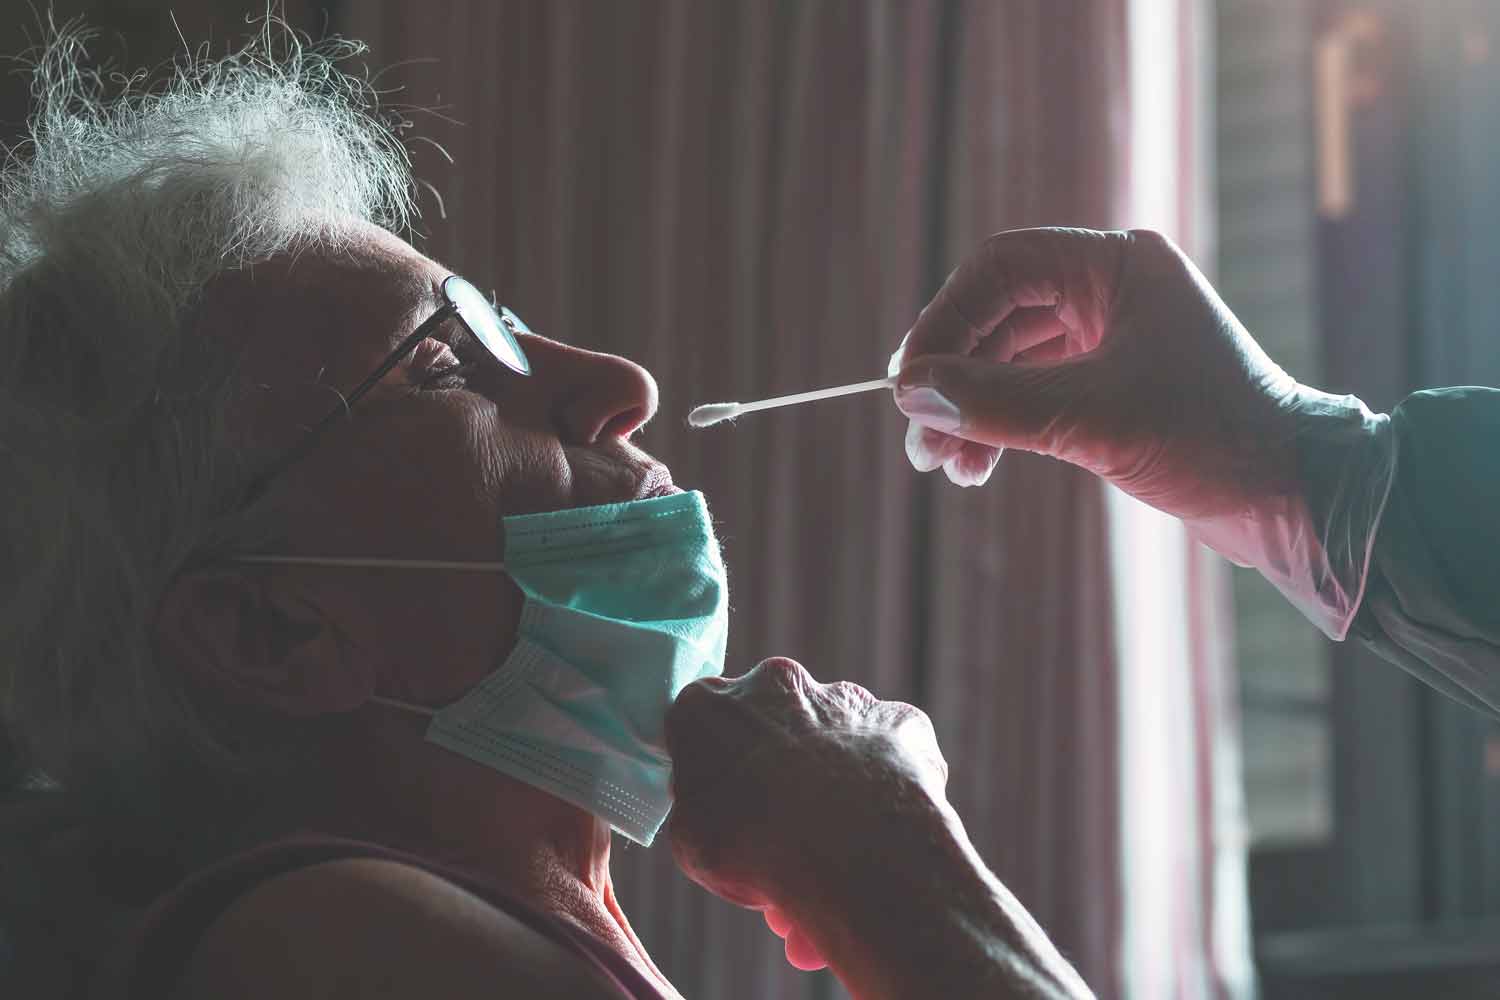 COVID-19 swab nose test performed on elderly woman